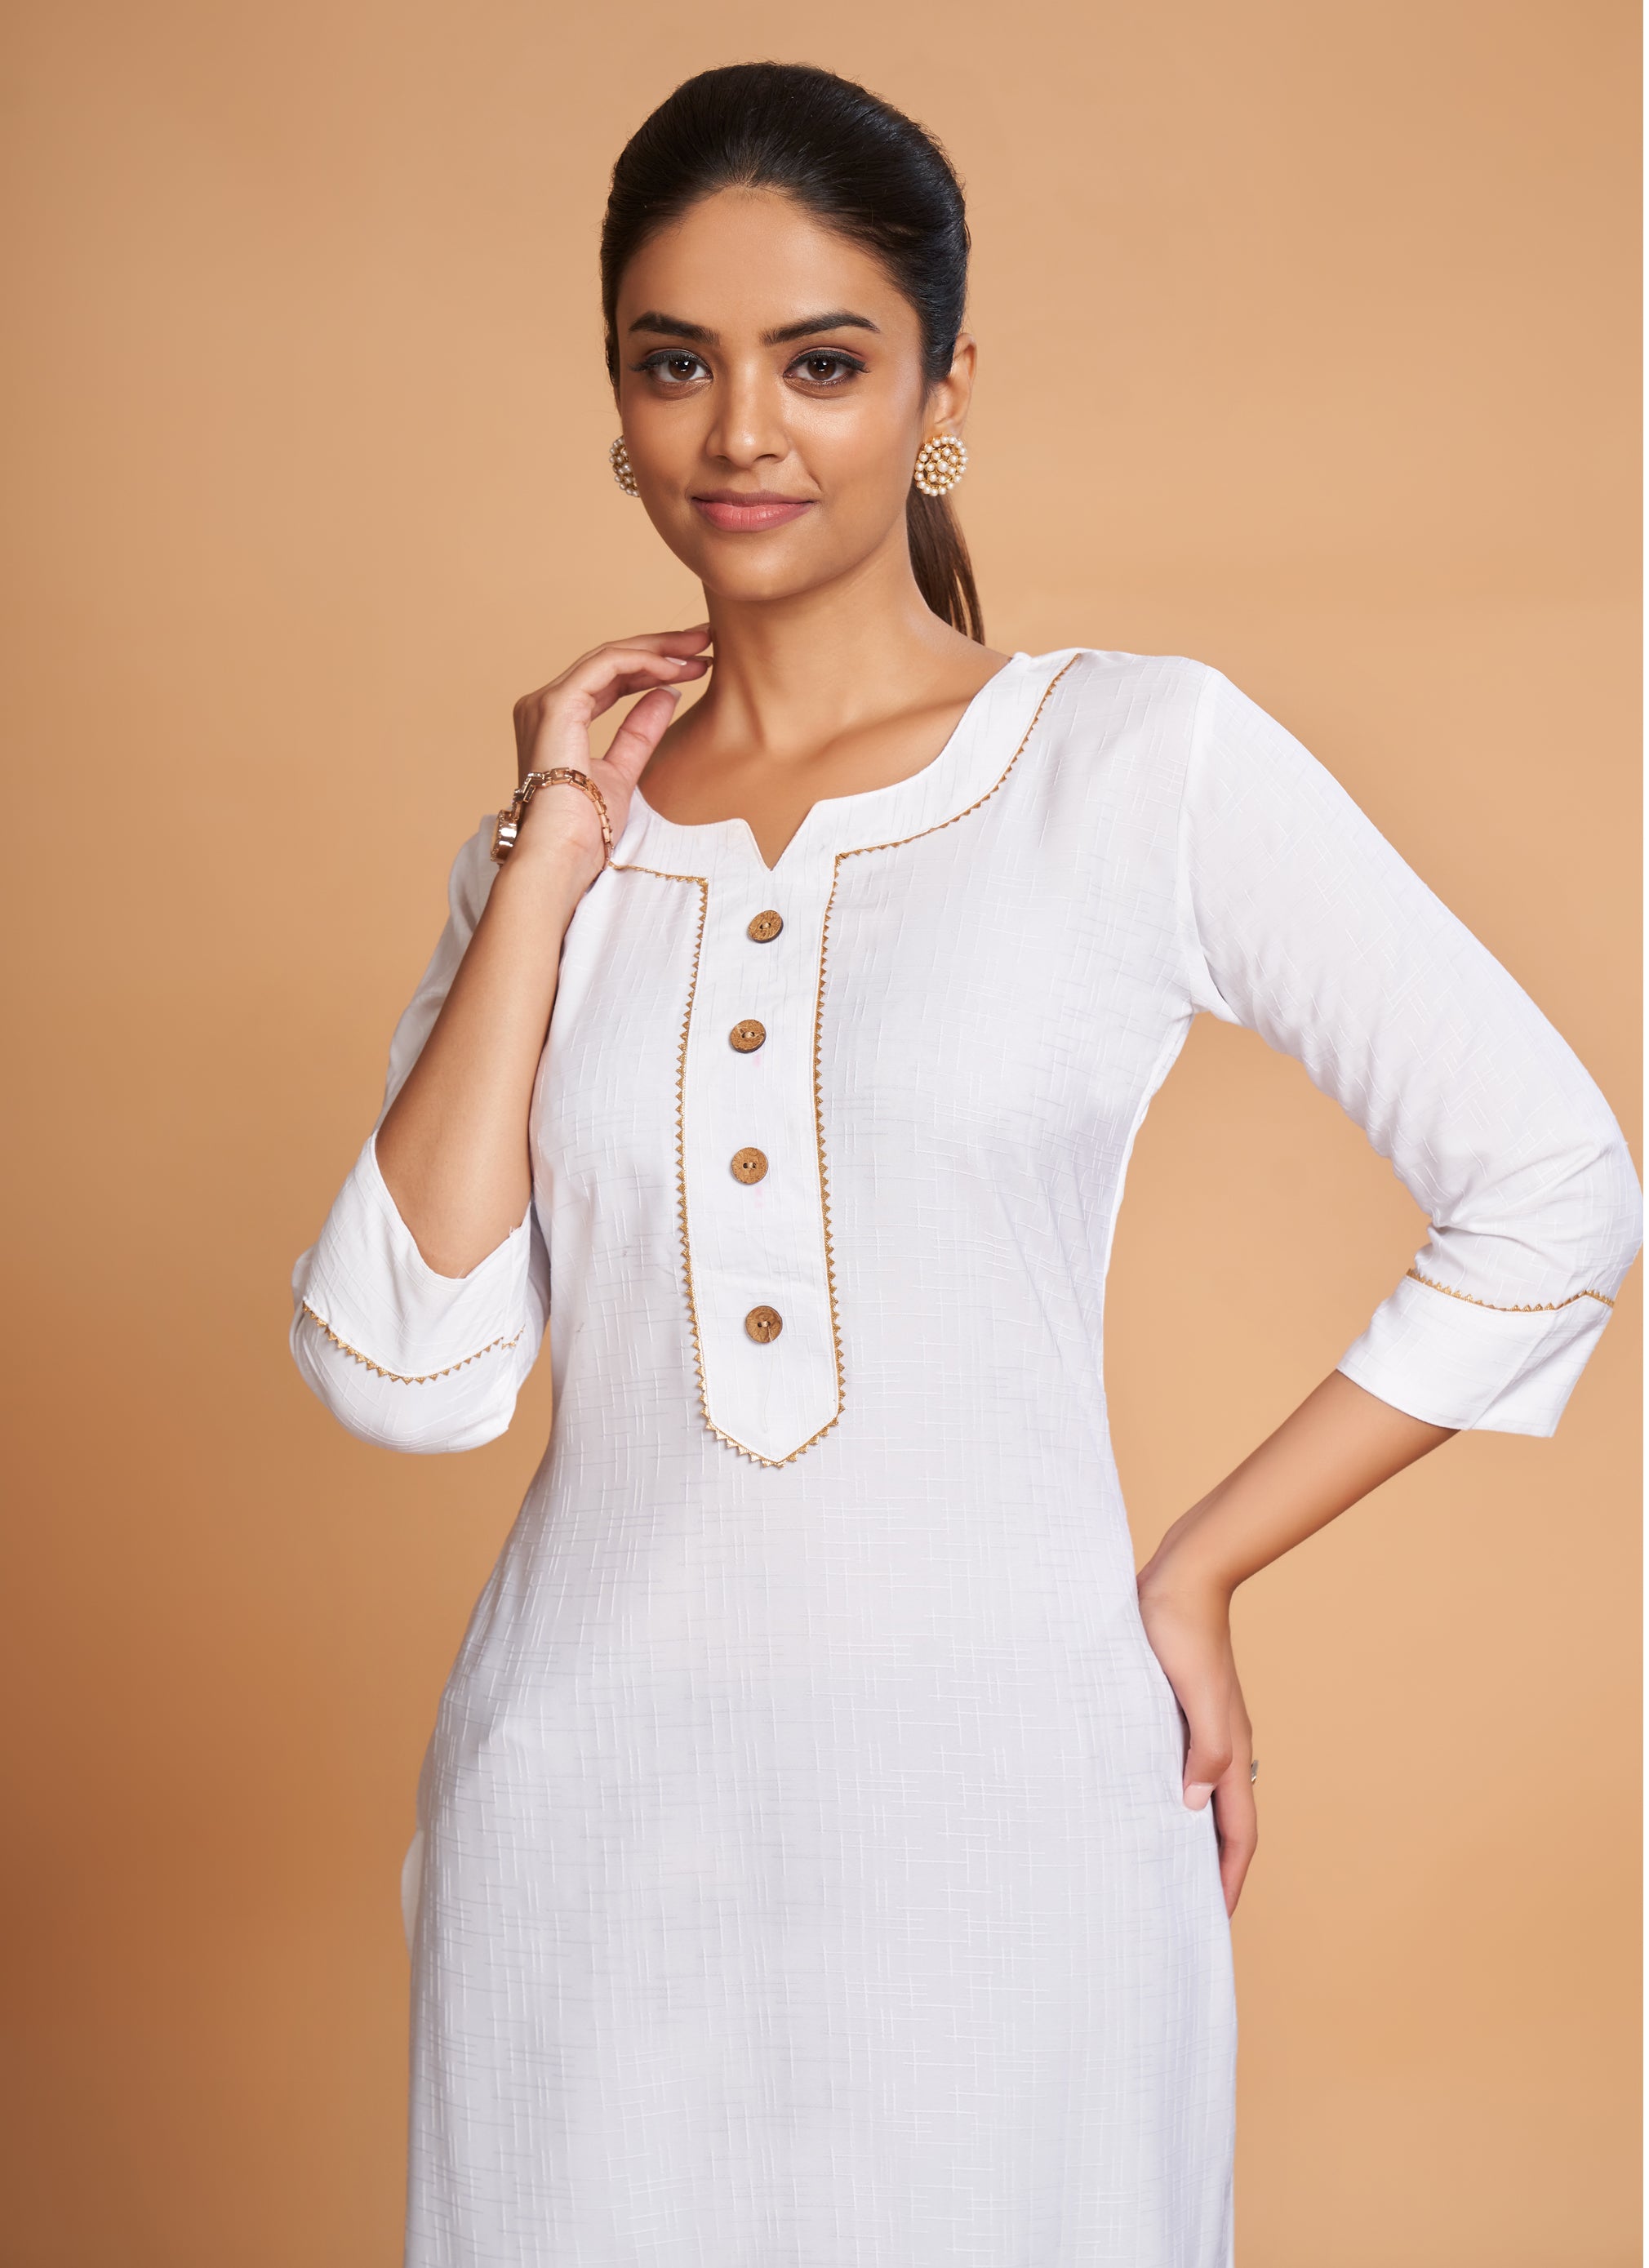 Buy Readymade Ladies Dresses Like Salwar Suit, Kurties - Kiran's Boutique